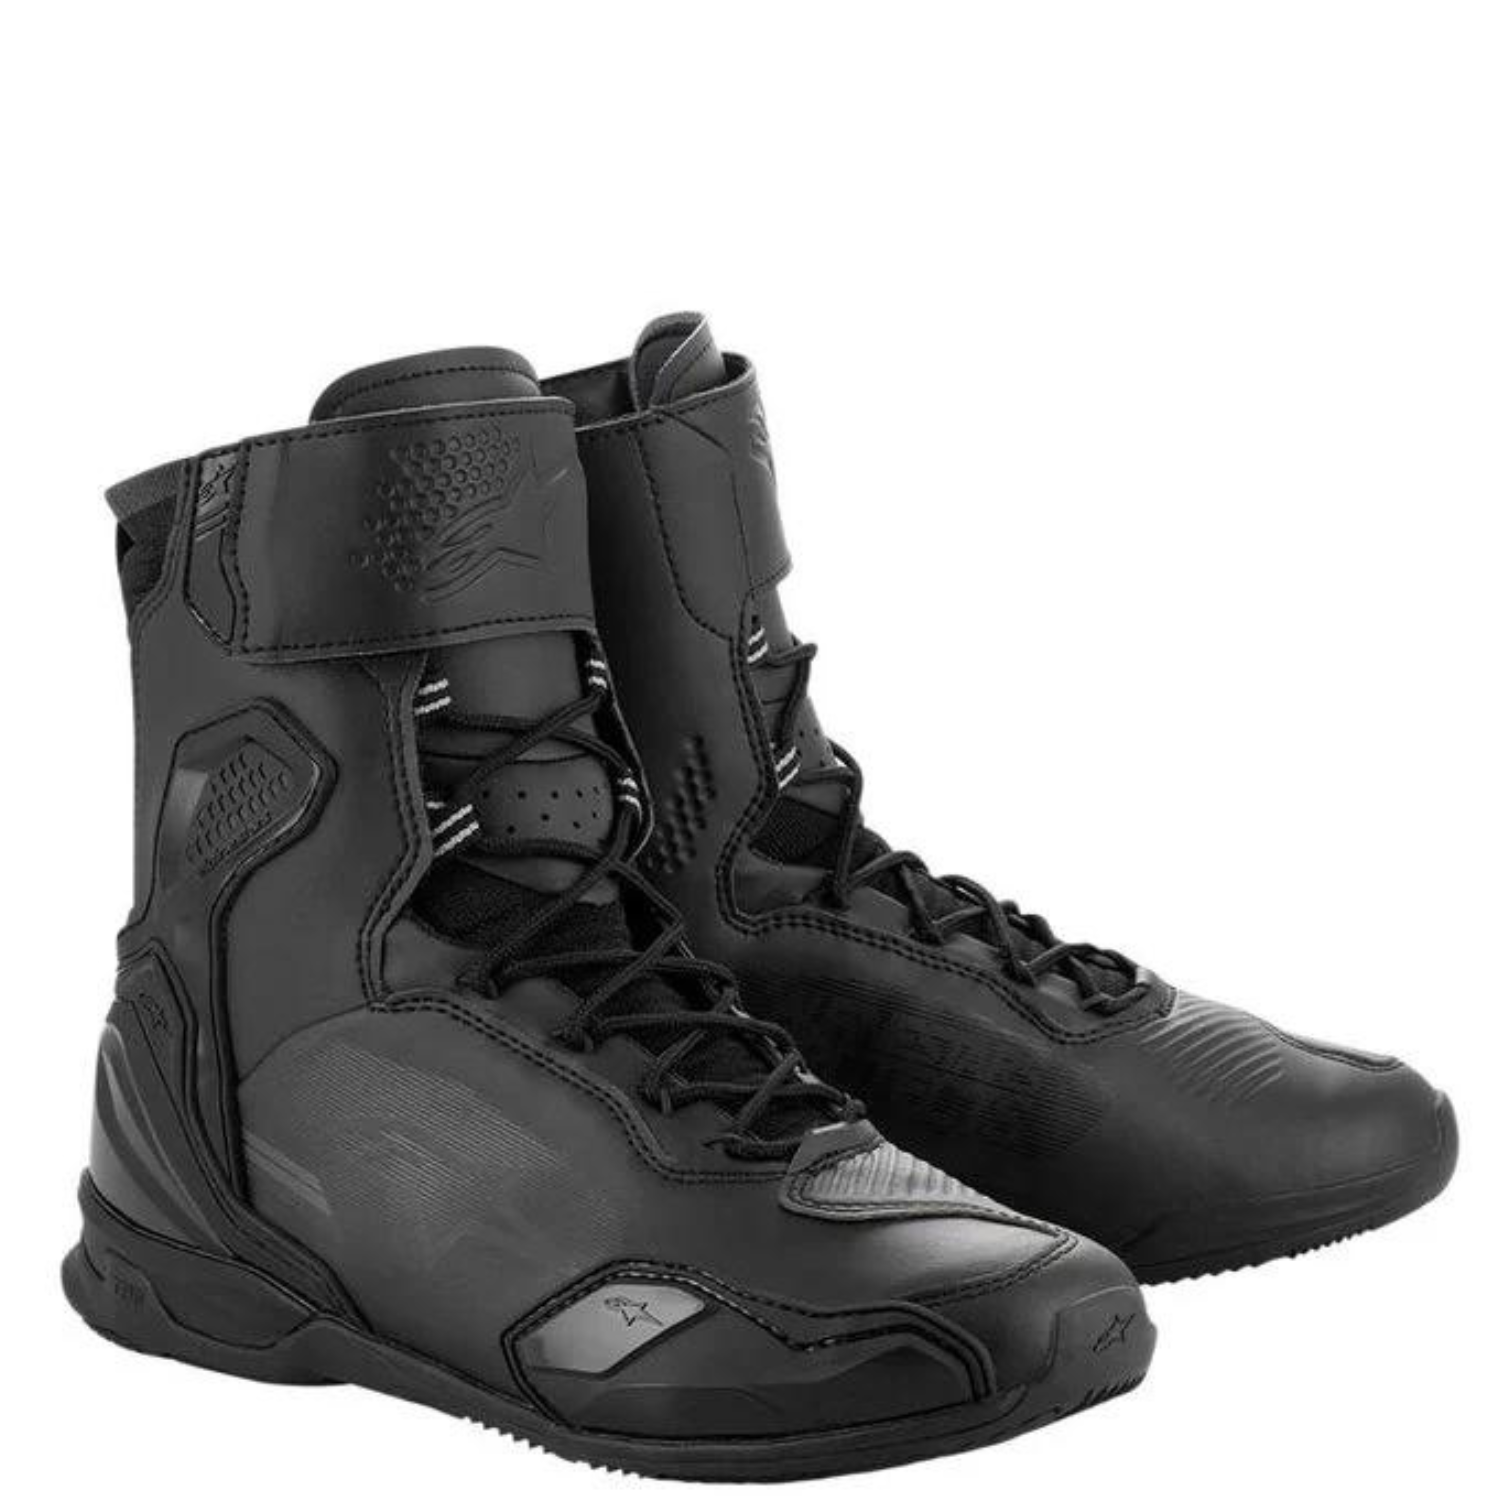 Image of Alpinestars Superfaster Shoes Black Size US 9 ID 8059347252605